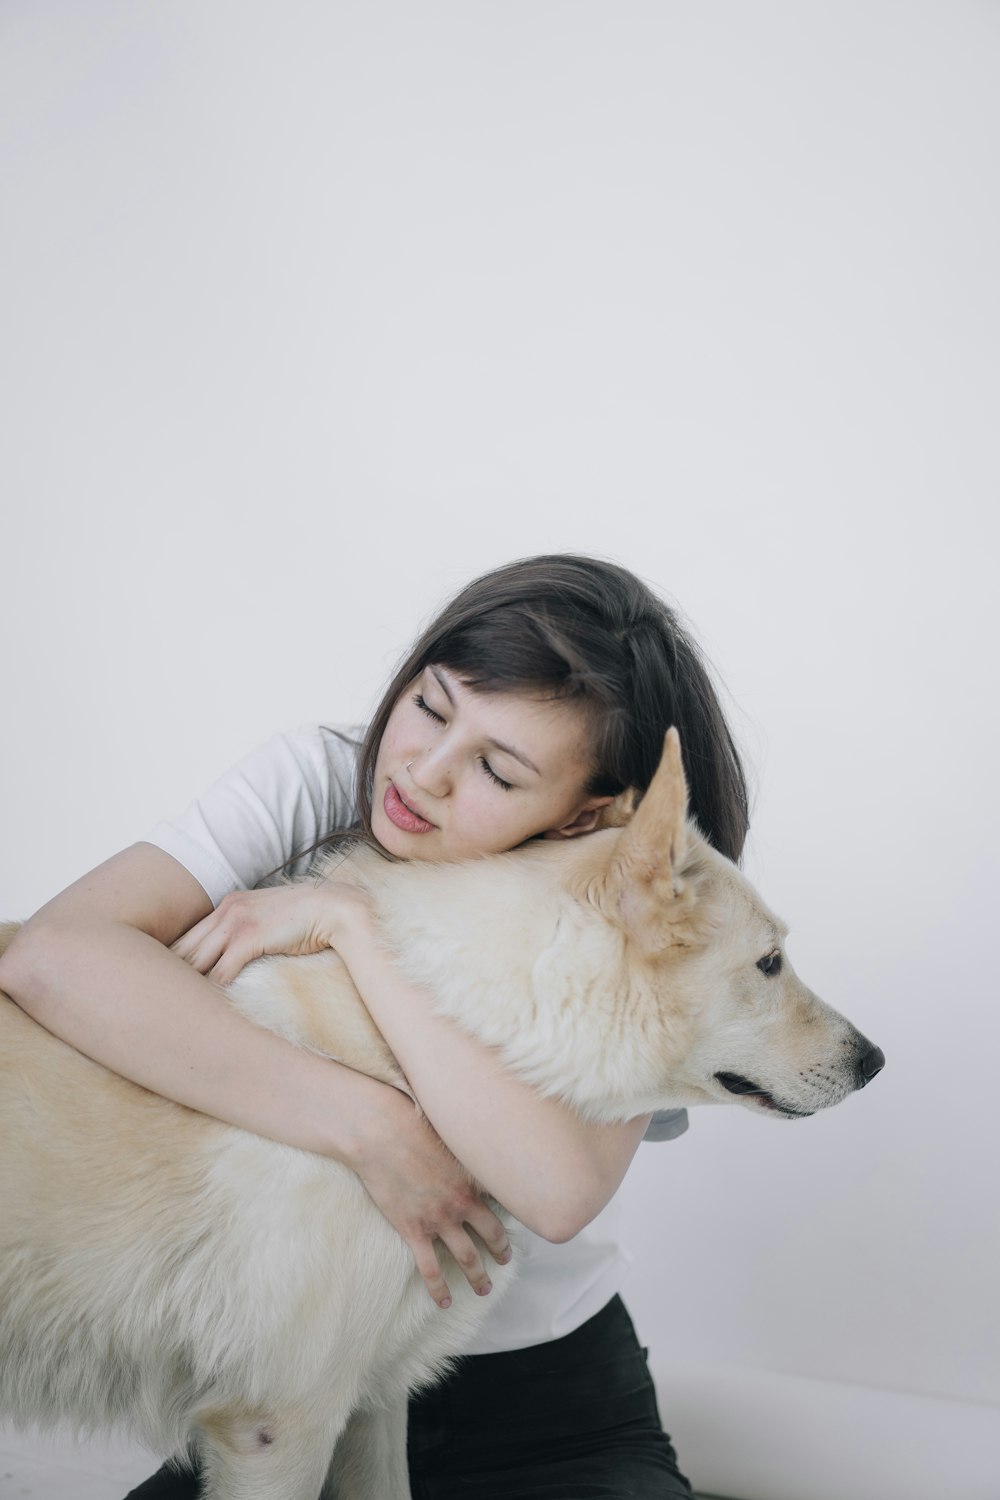 woman hugging a dog photo – Free Dog Image on Unsplash